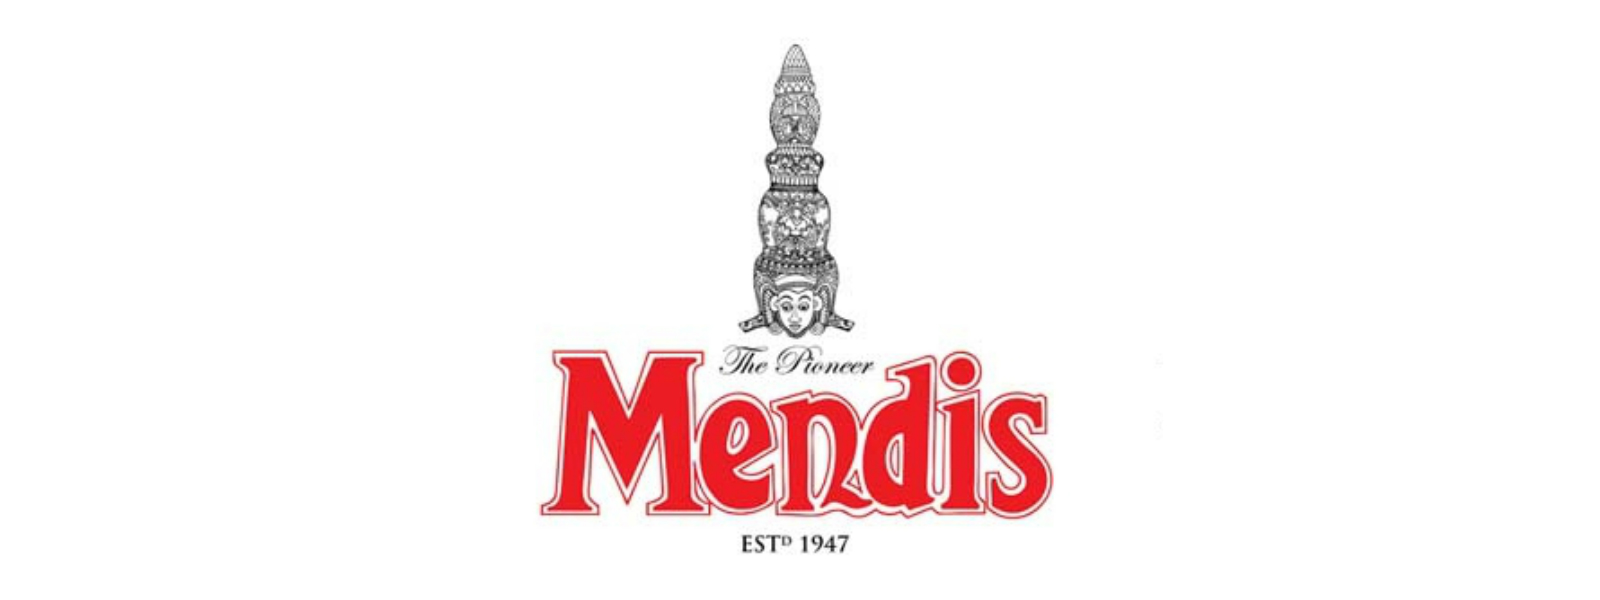 W .M. Mendis & Co. Ltd. loses license to produce alcohol, again